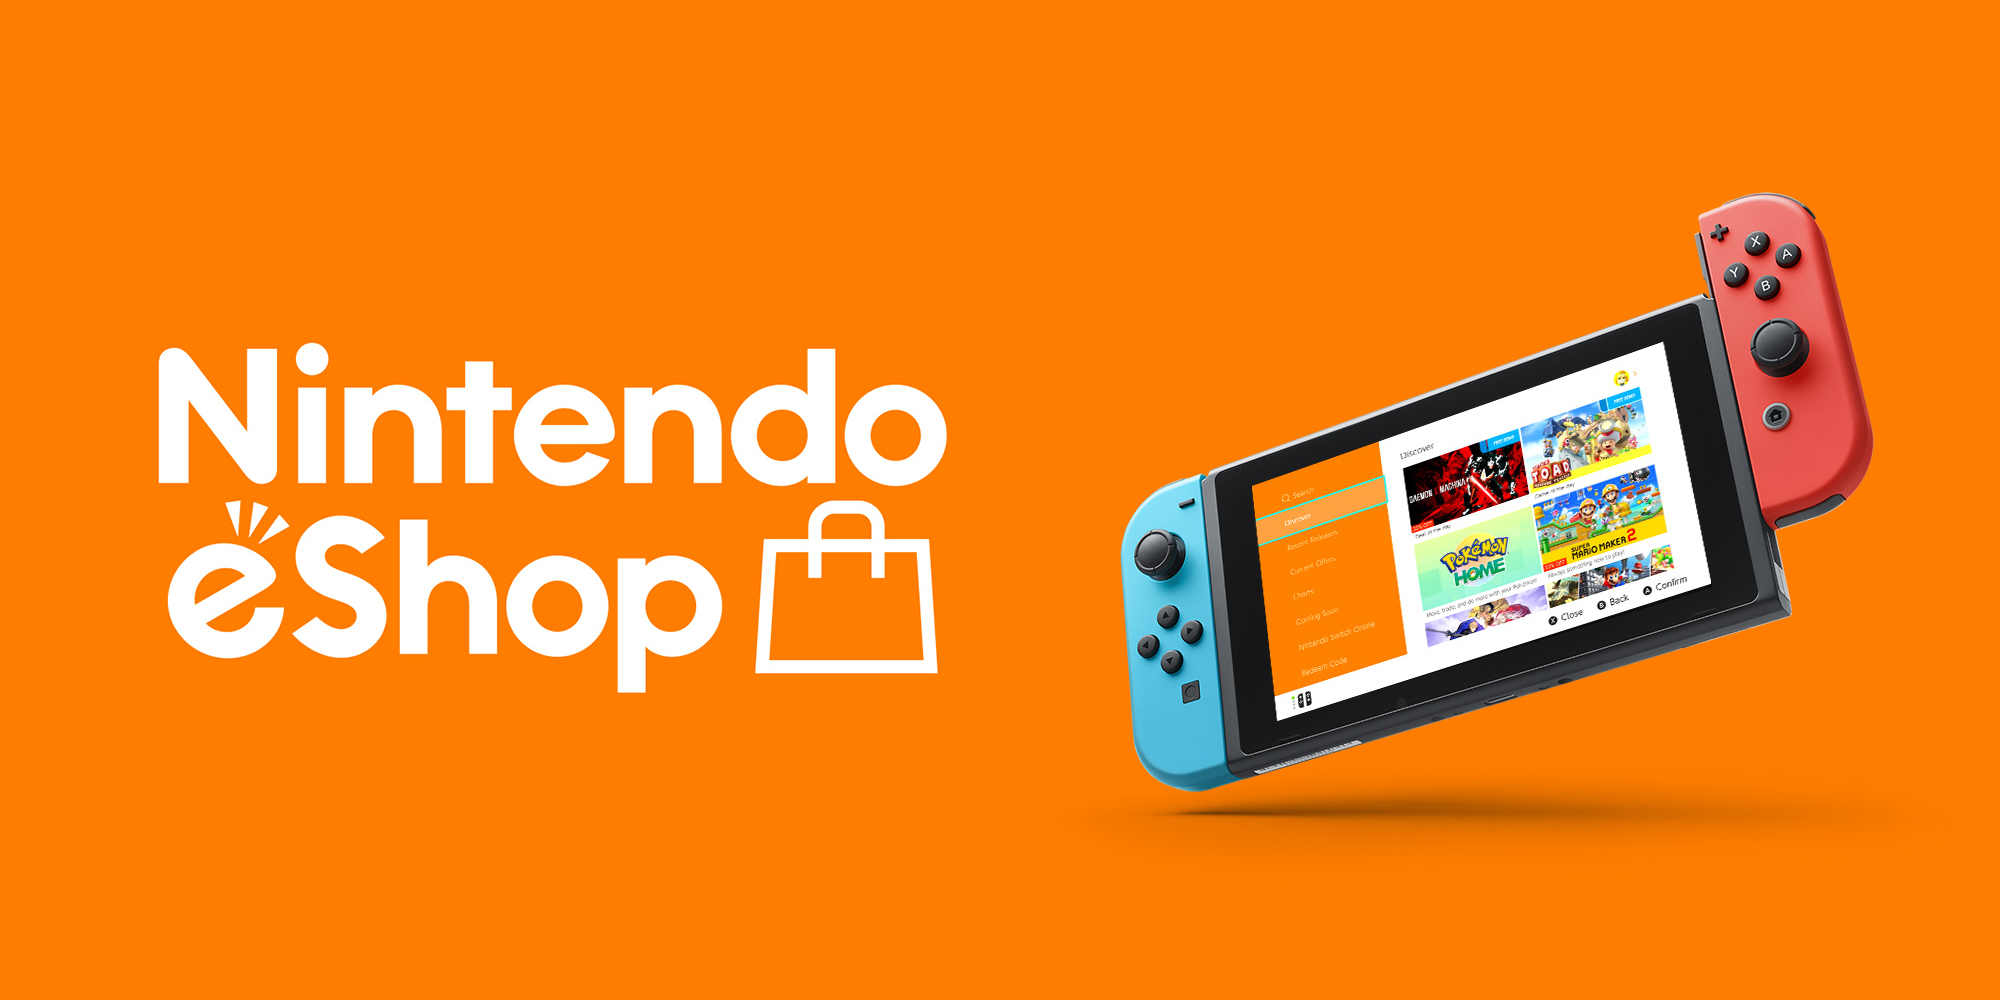 Nintendo eShop | Nintendo